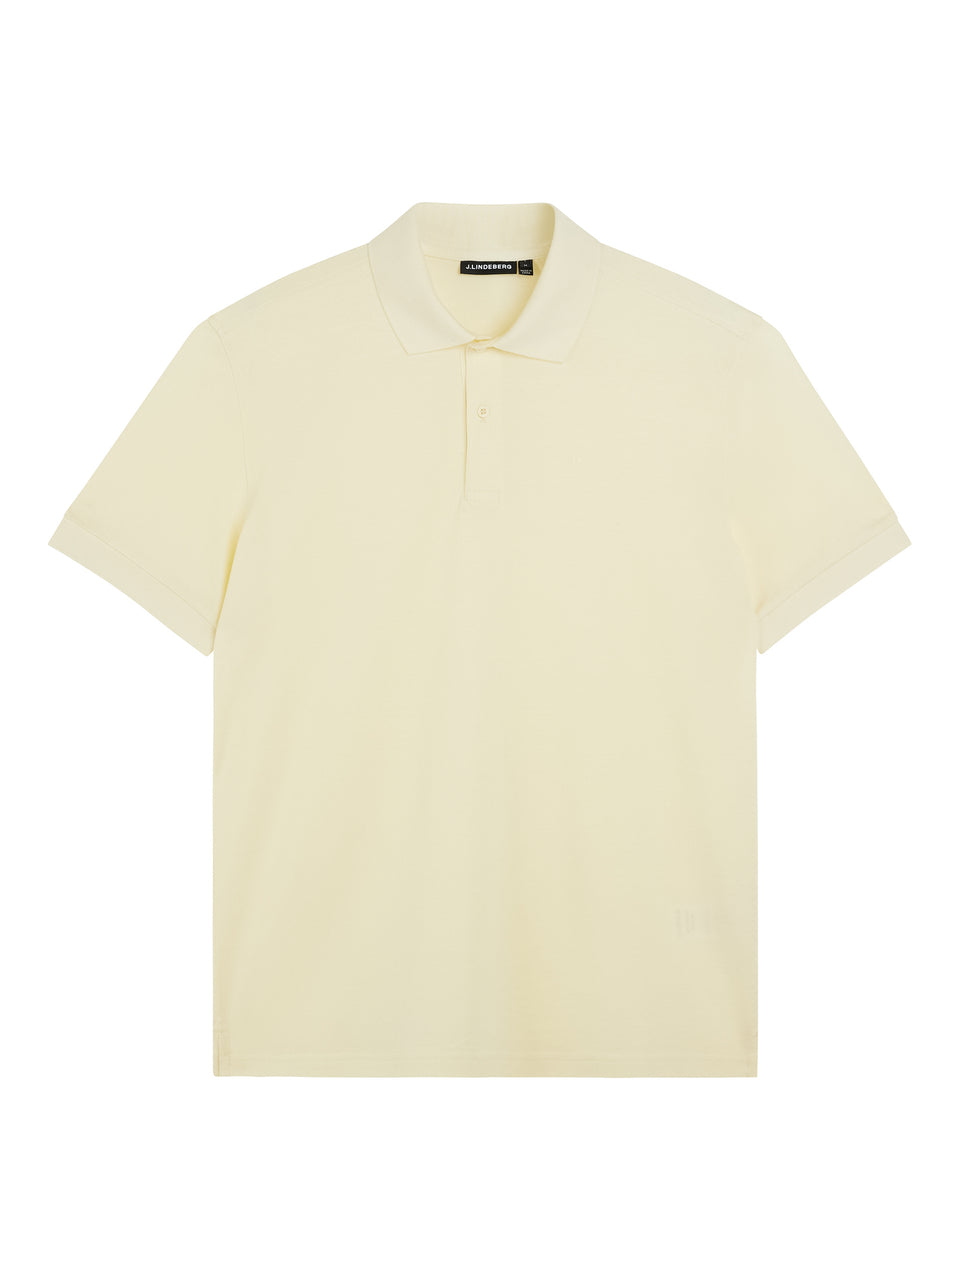 Troy Polo shirt / Pear Sorbet